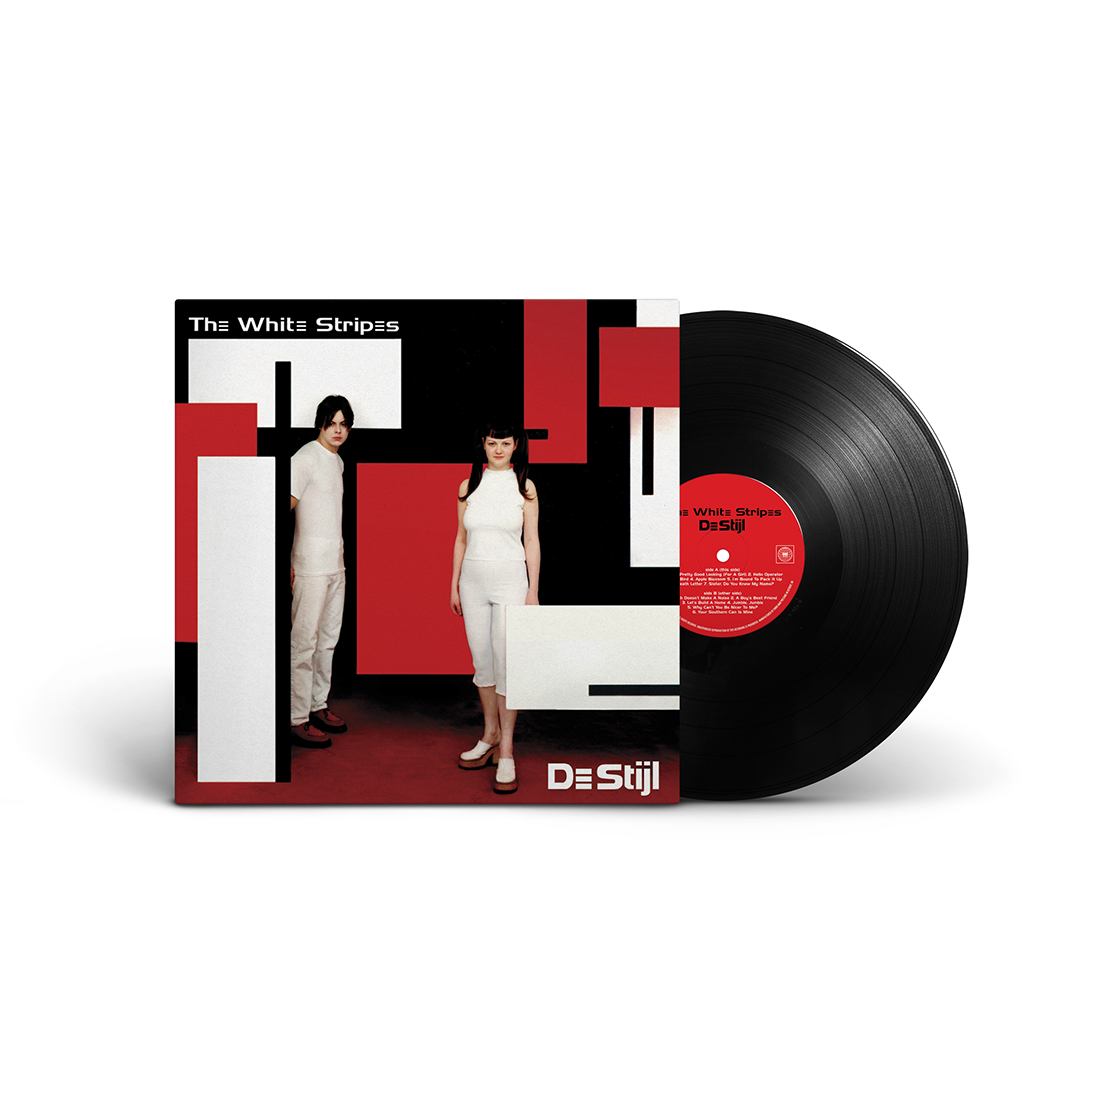 De Stijl: Vinyl LP